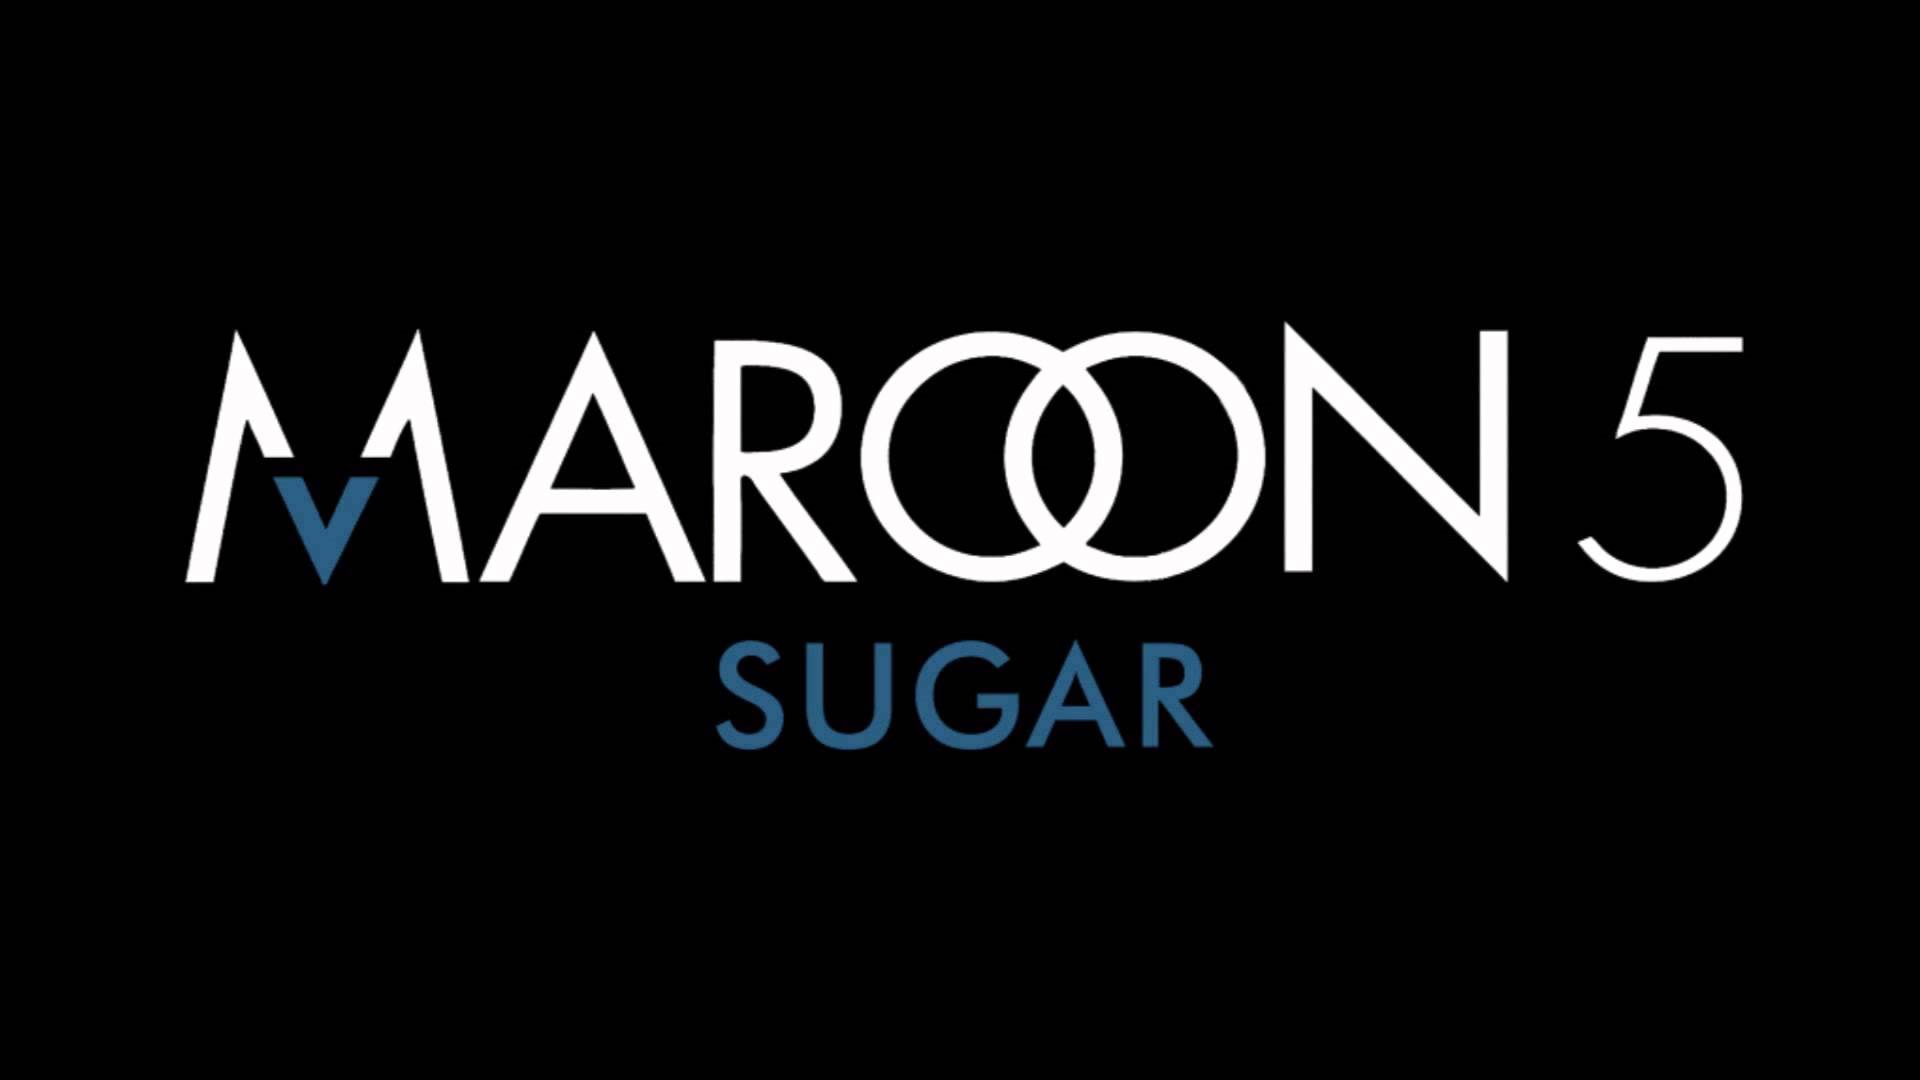 maroon 5 logo wallpaper iphone